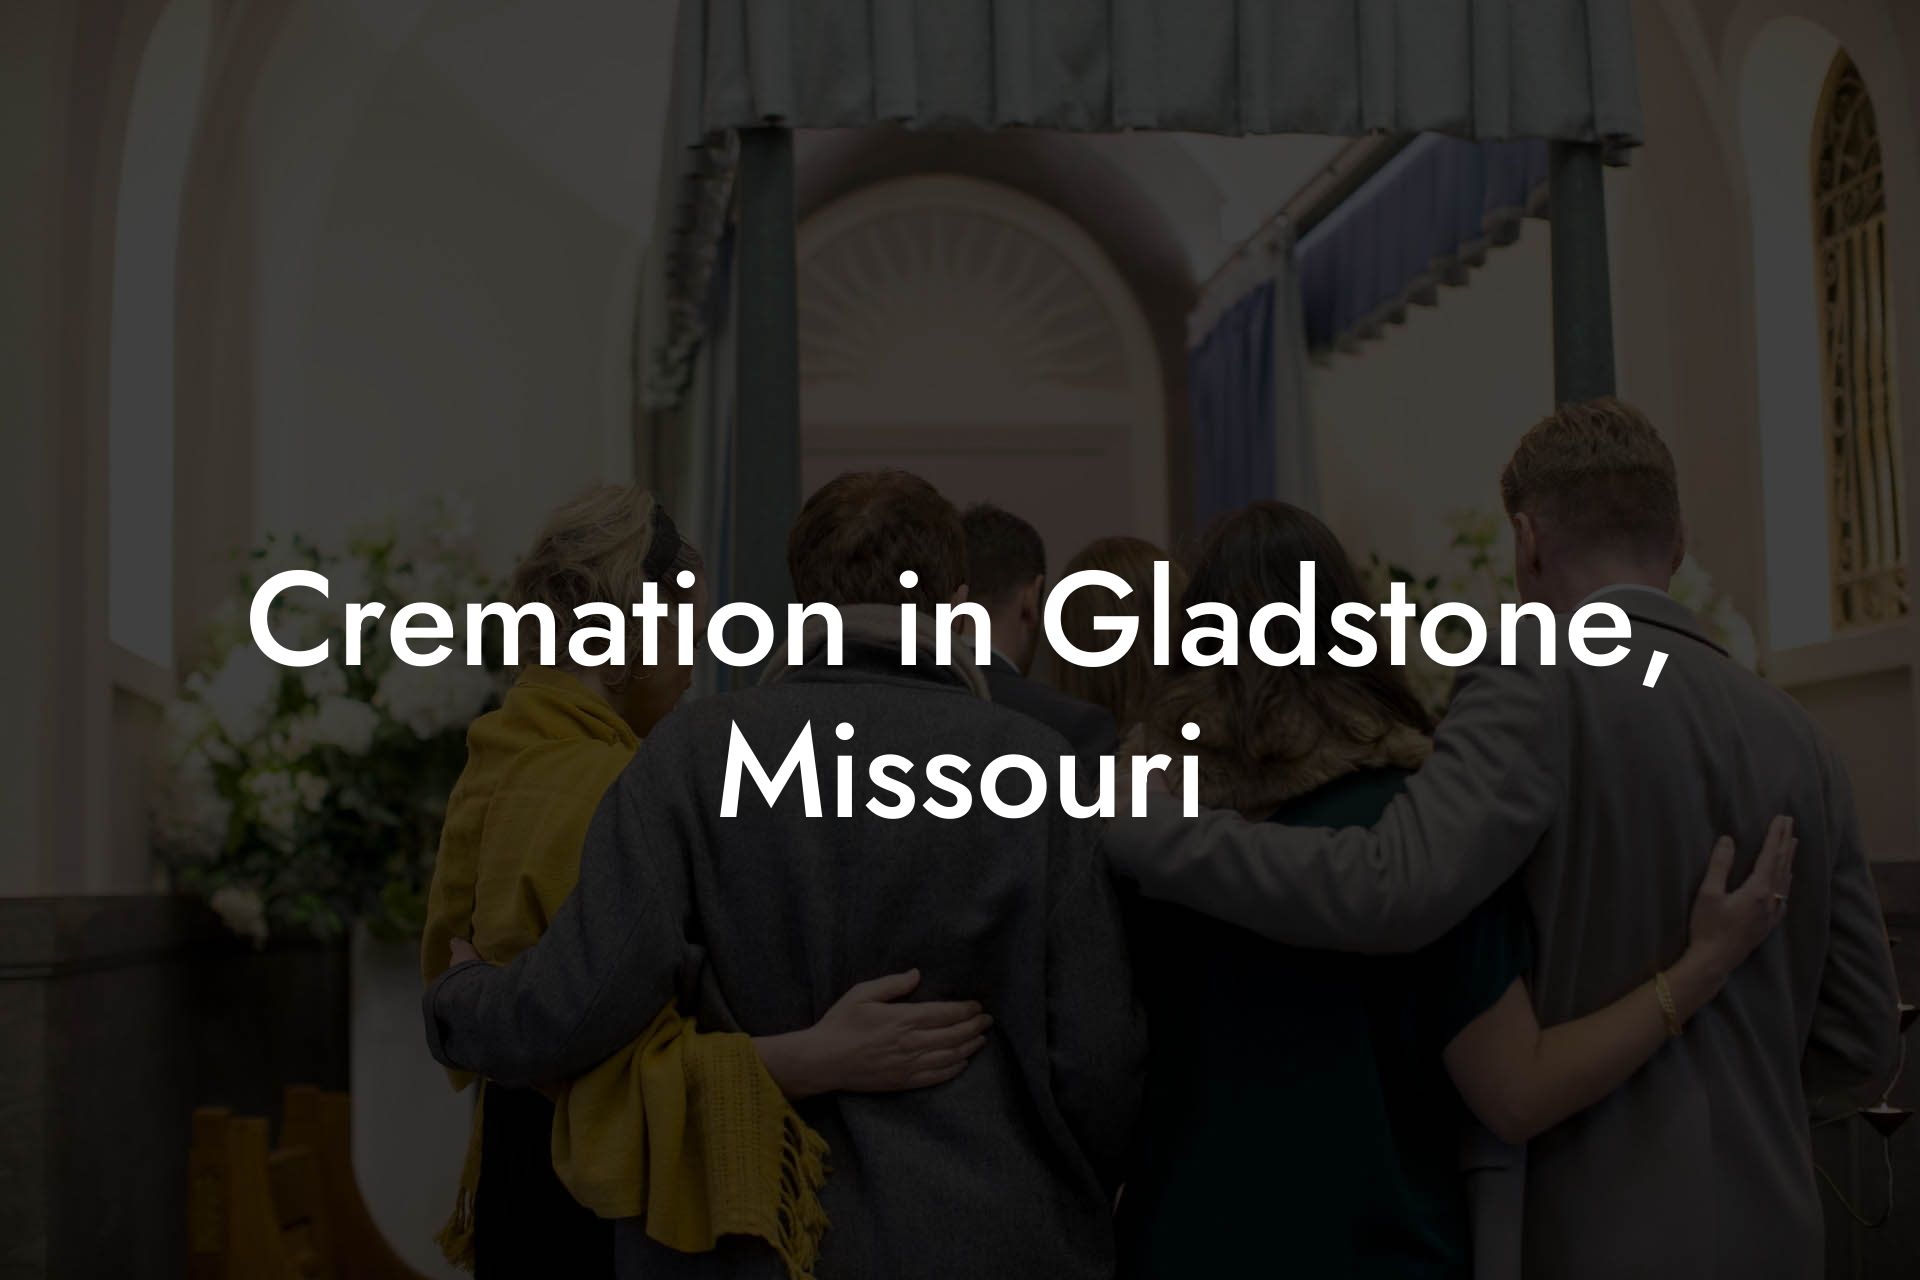 Cremation in Gladstone, Missouri